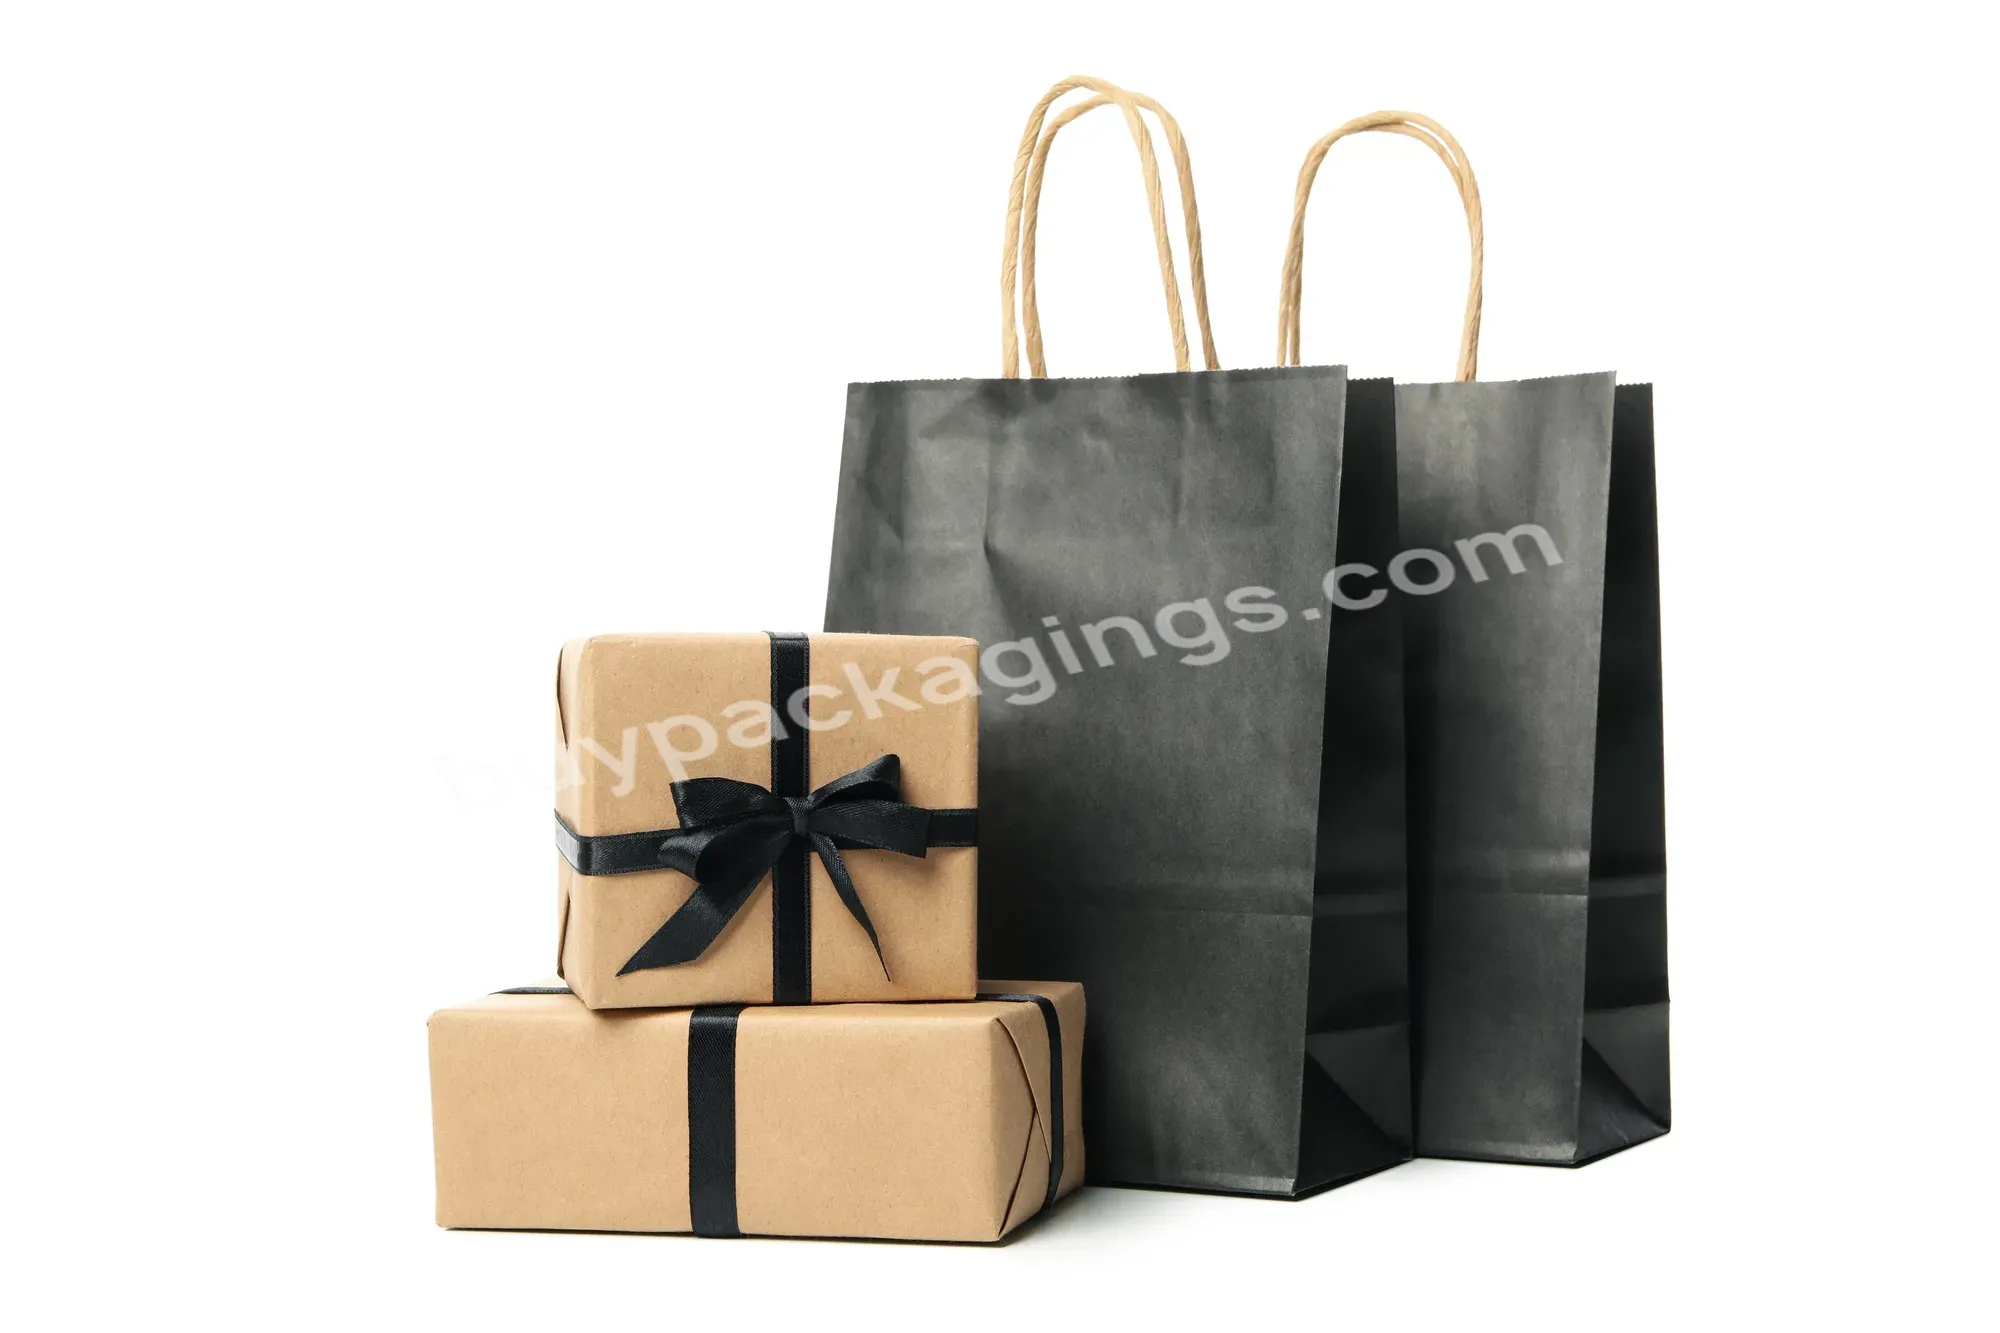 Wholesale Take Out Packaging Kraft Paper Bag Brown Craft Paper Shopping Bag